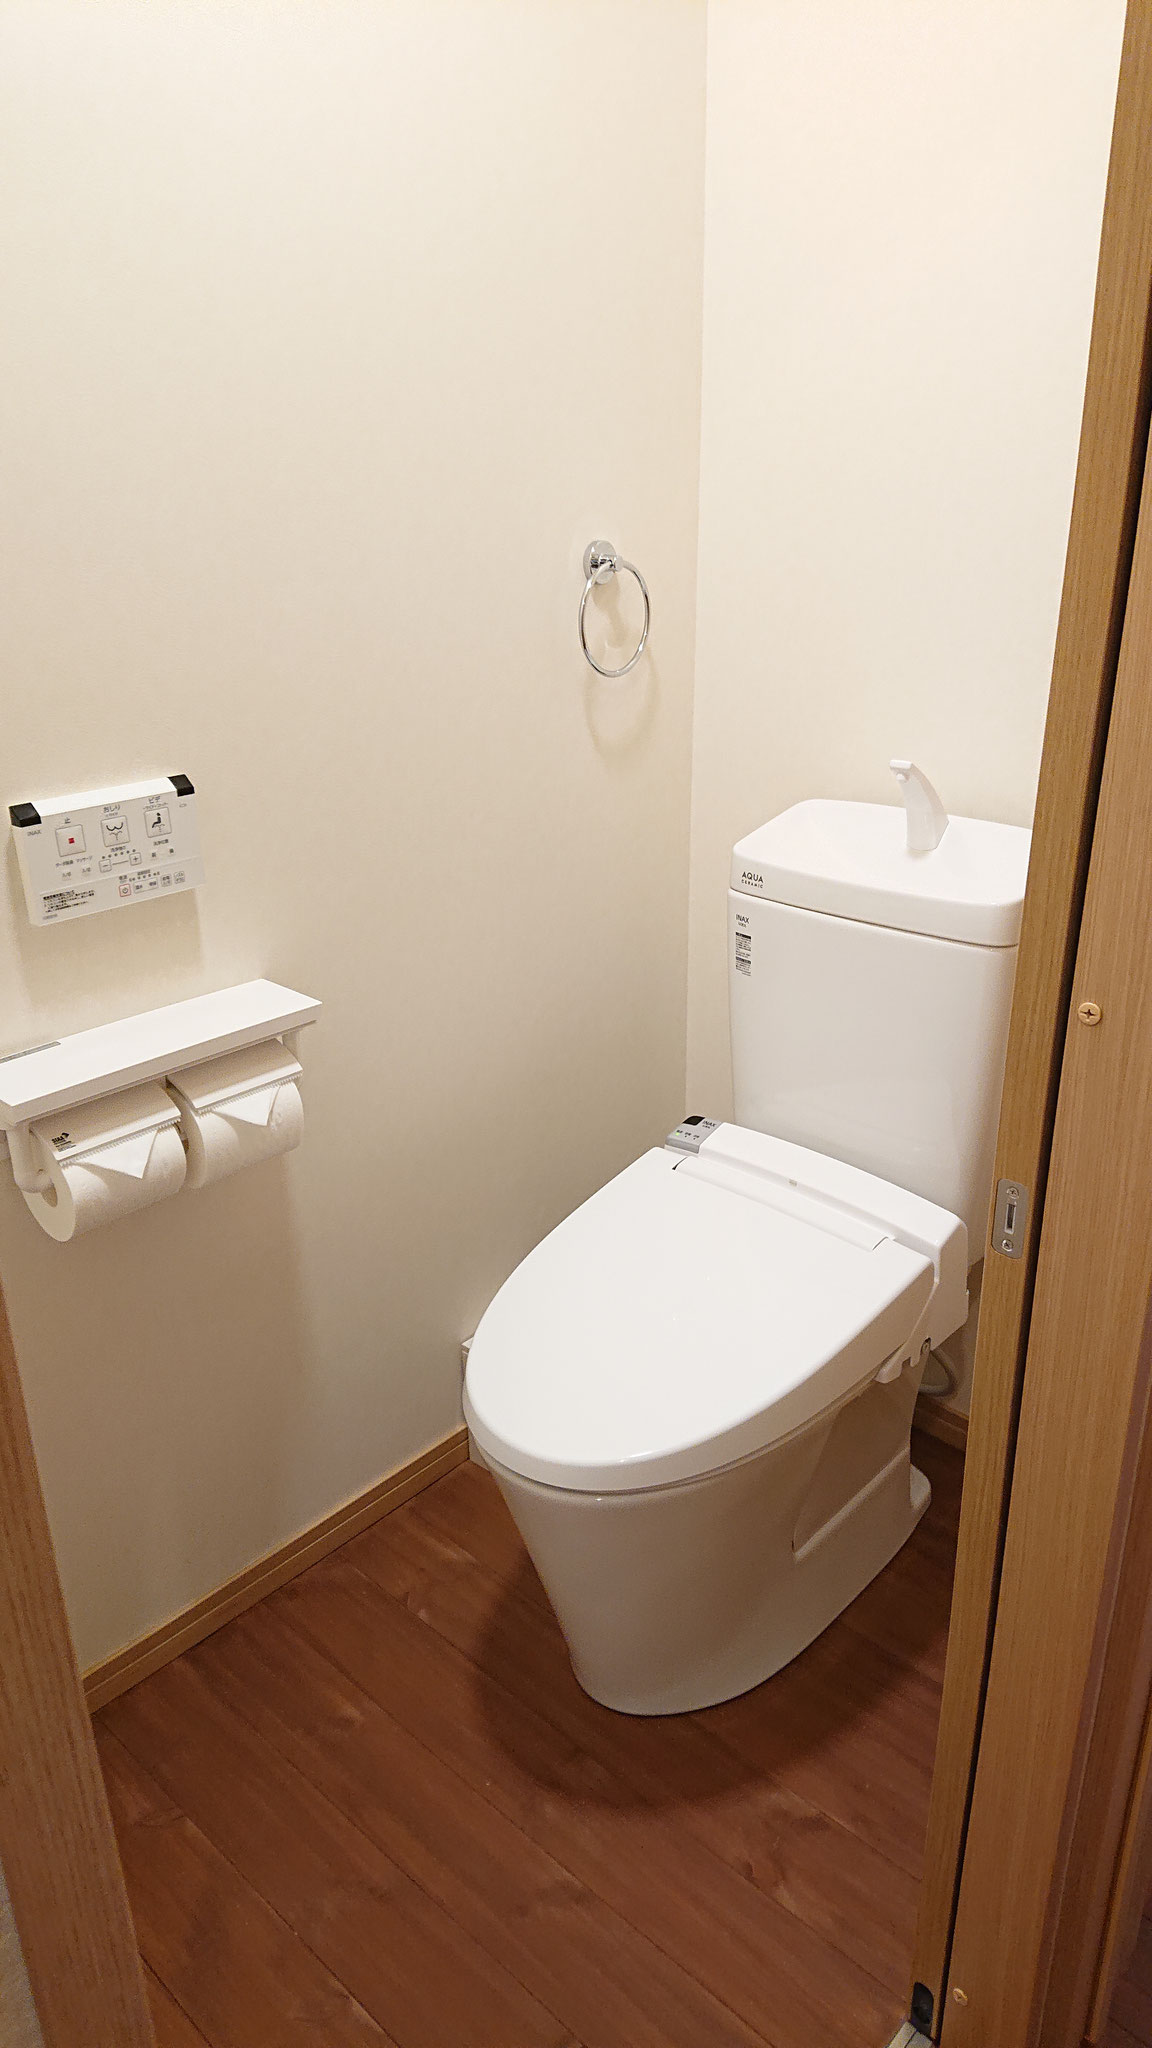 Toilet with a bidet function (Ensuite indoor)